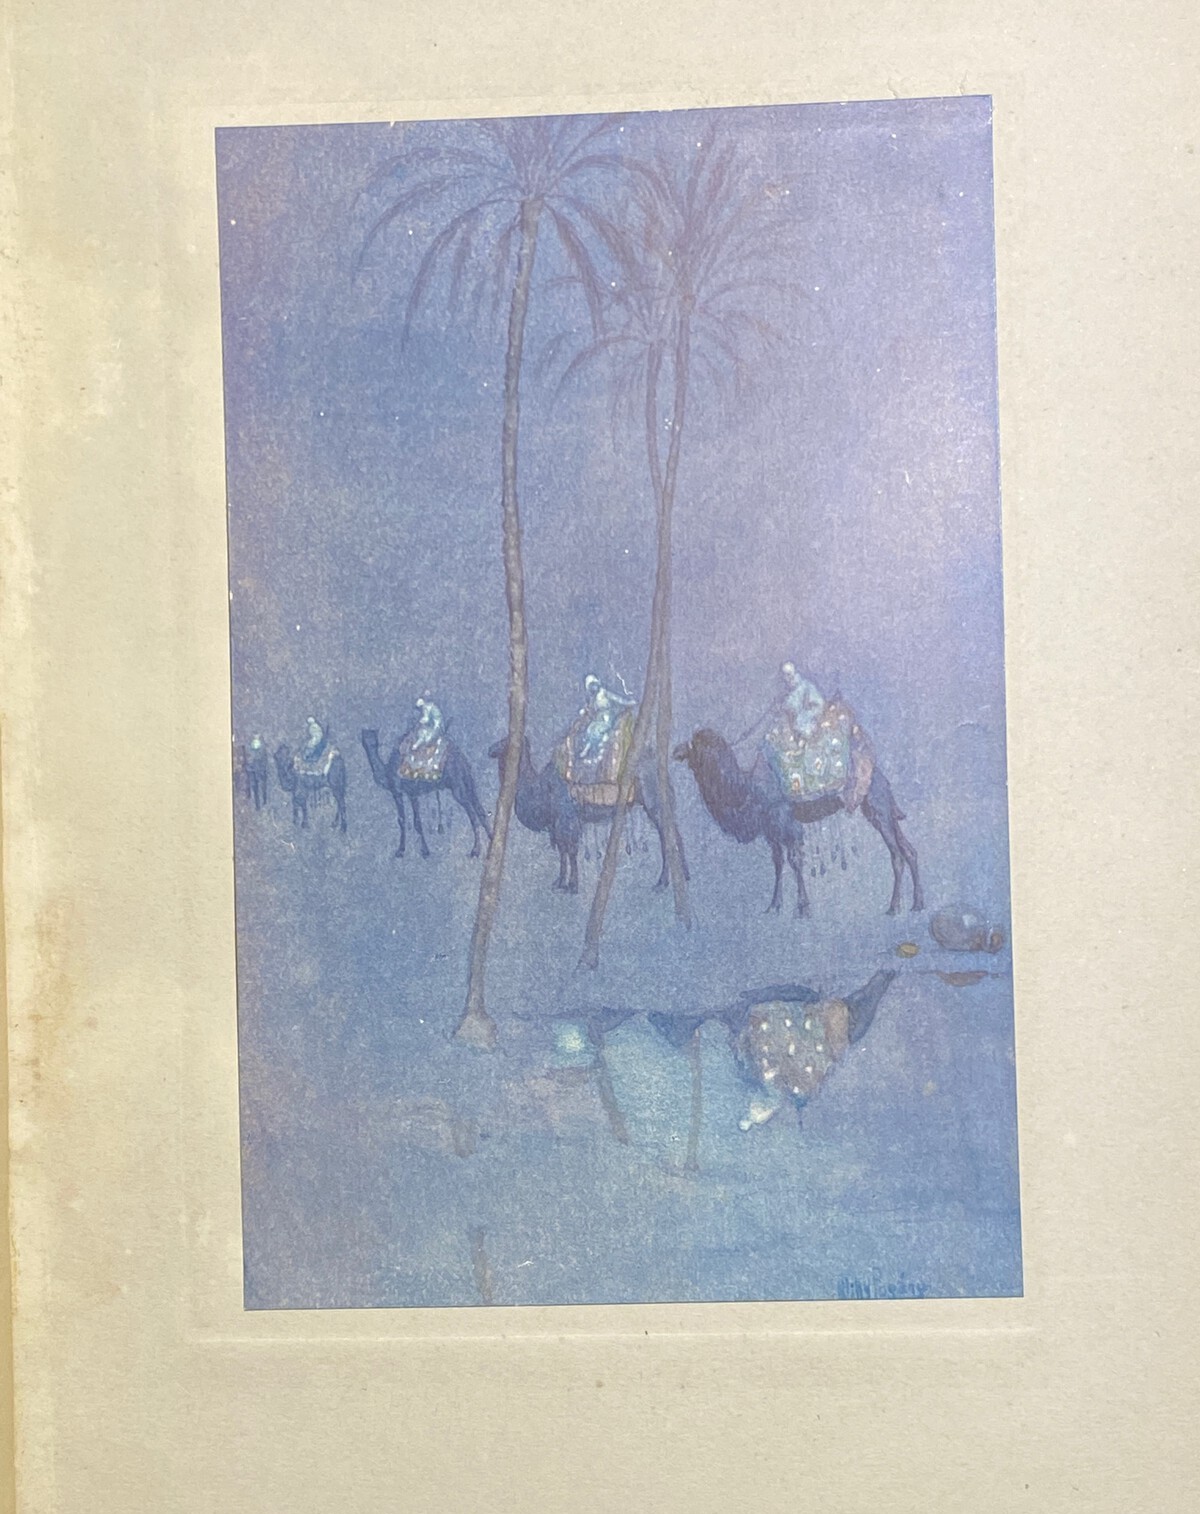 Camels riding through the desert